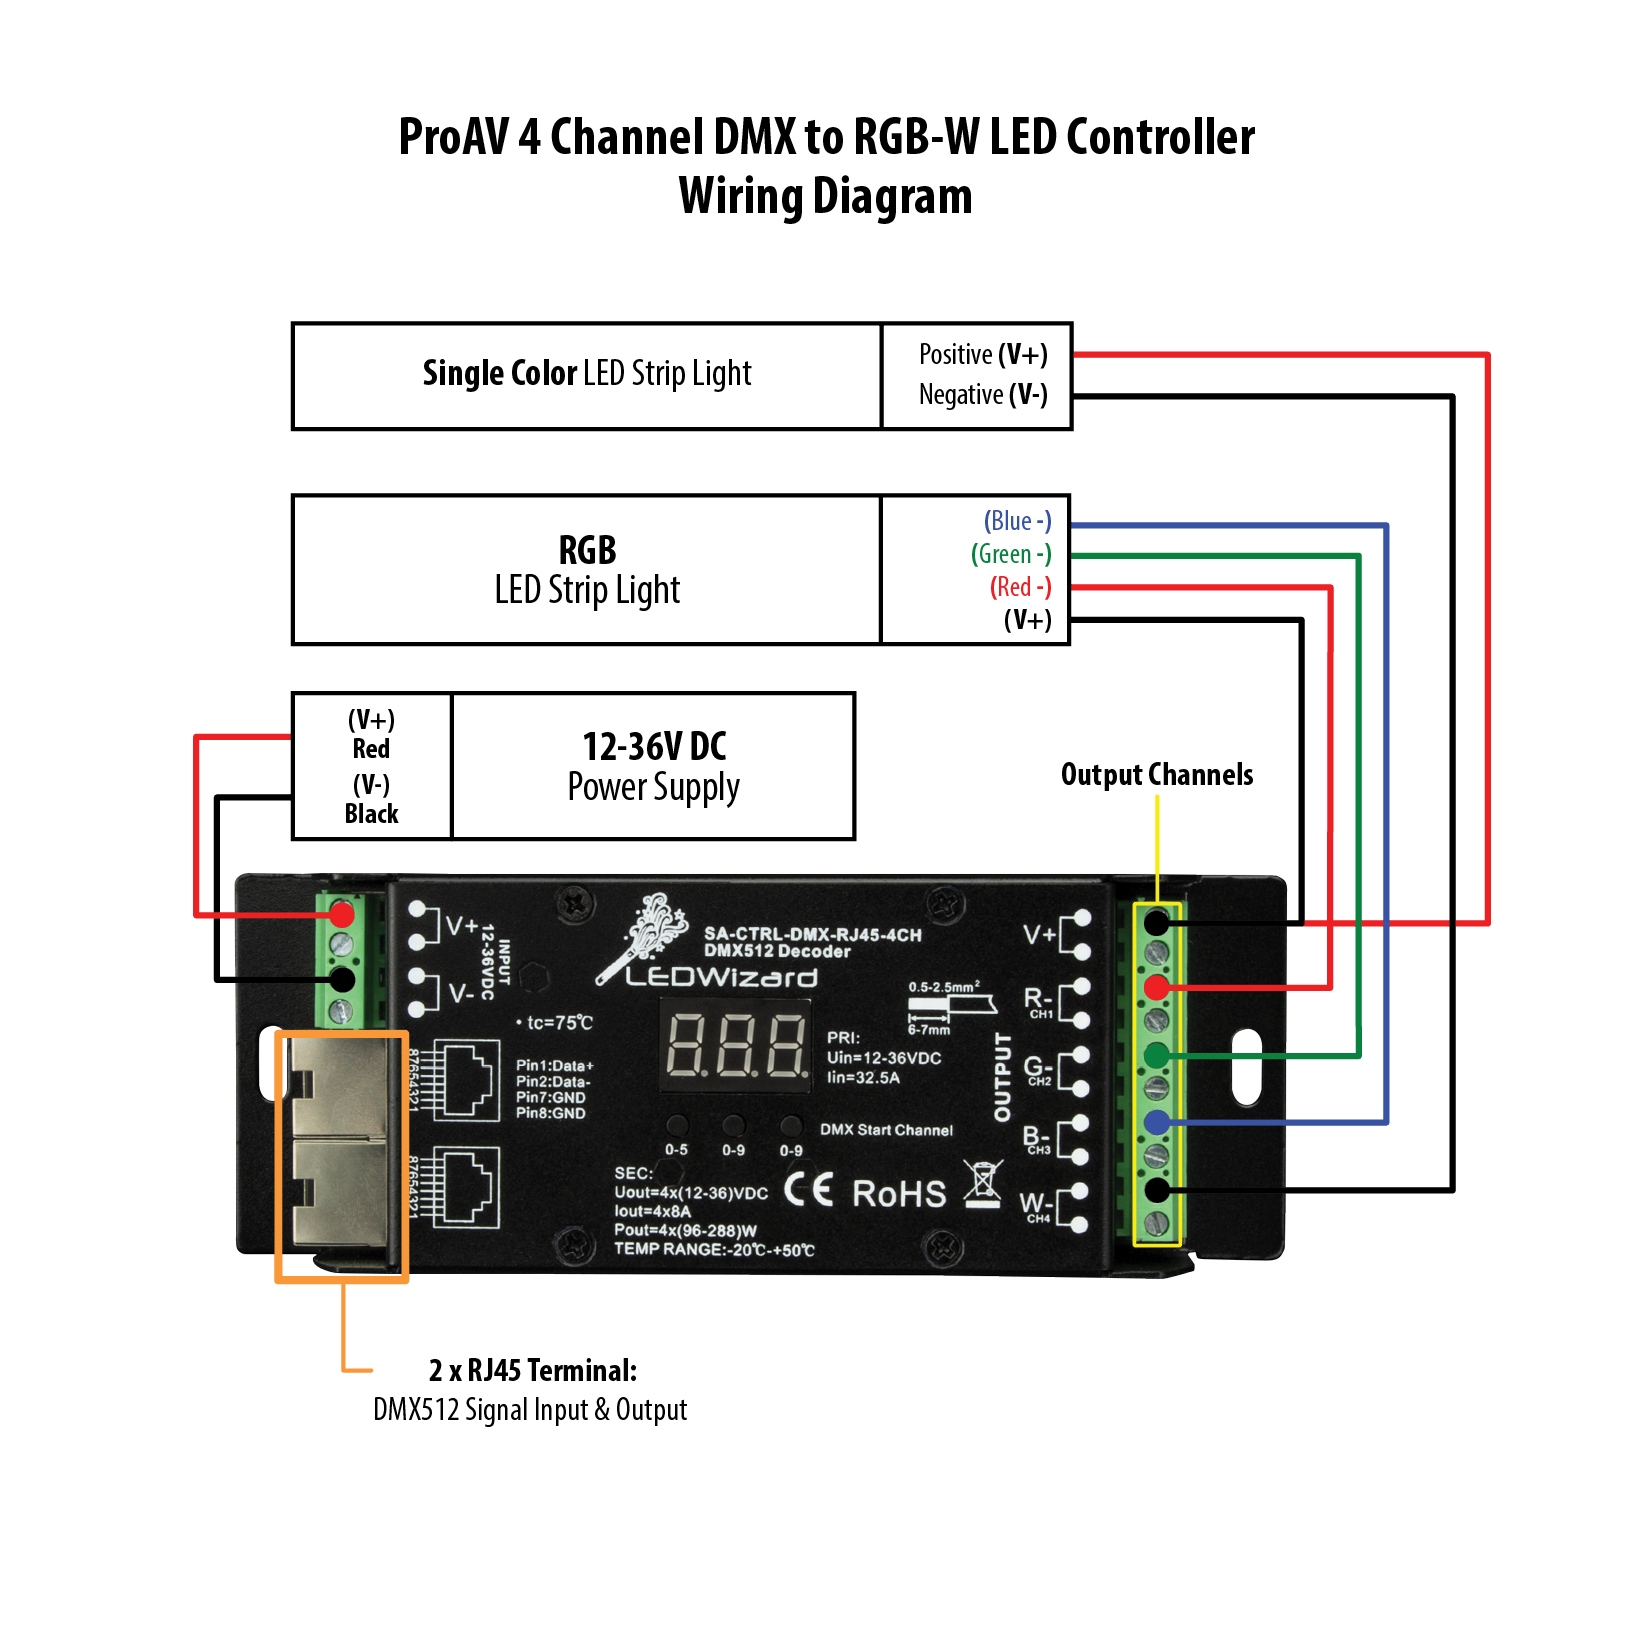 ProAV 4 Channel DMX to LED Decoder